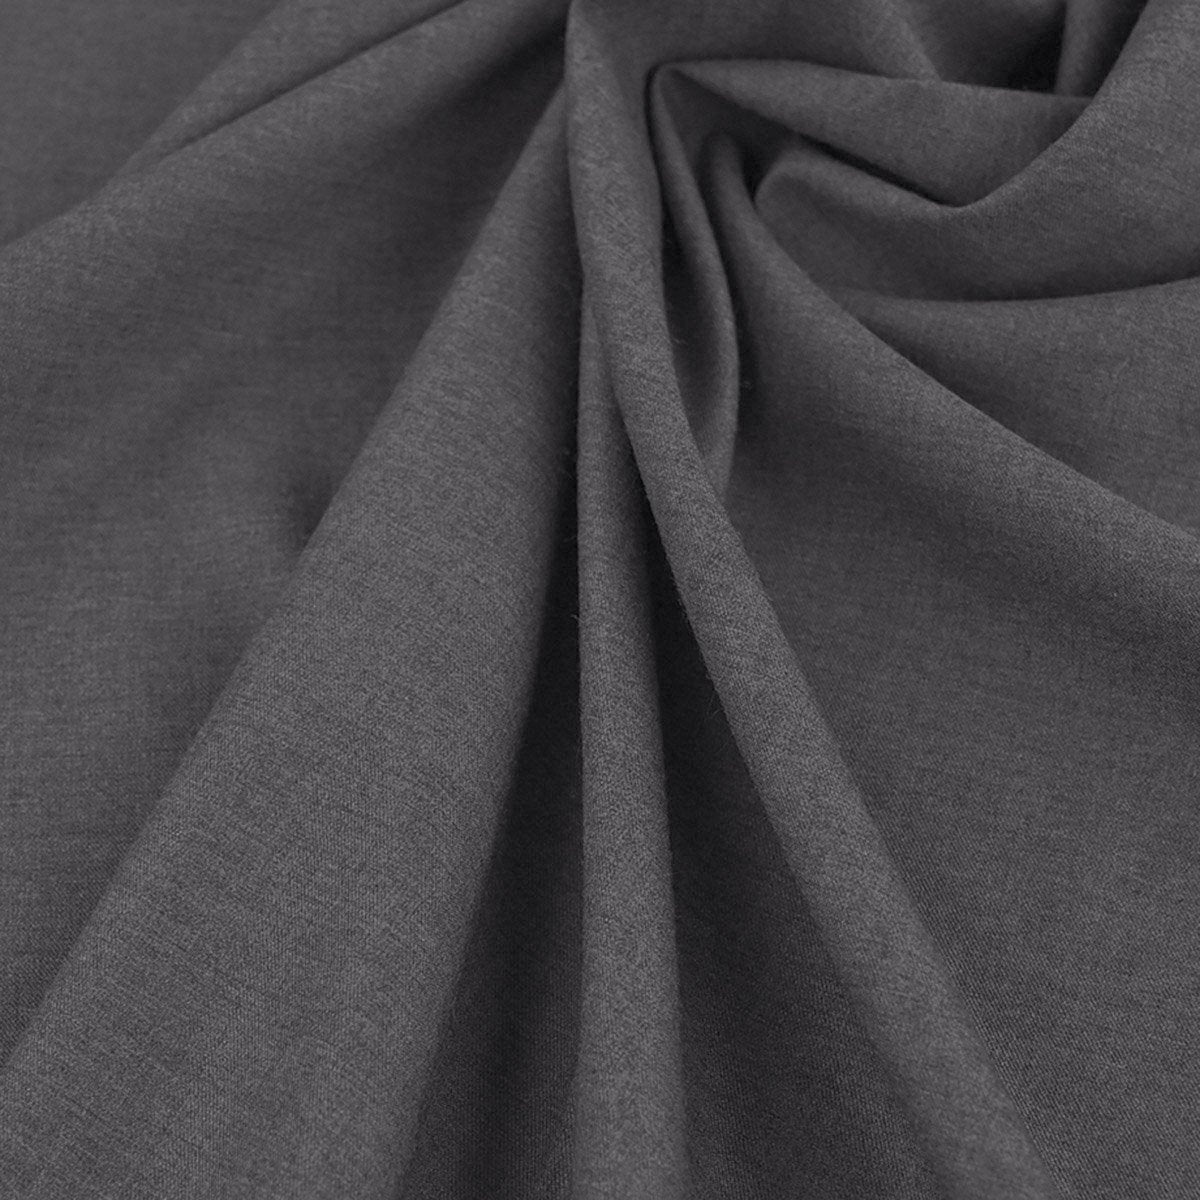 Grey Lightweigth Suiting Fabric 97544